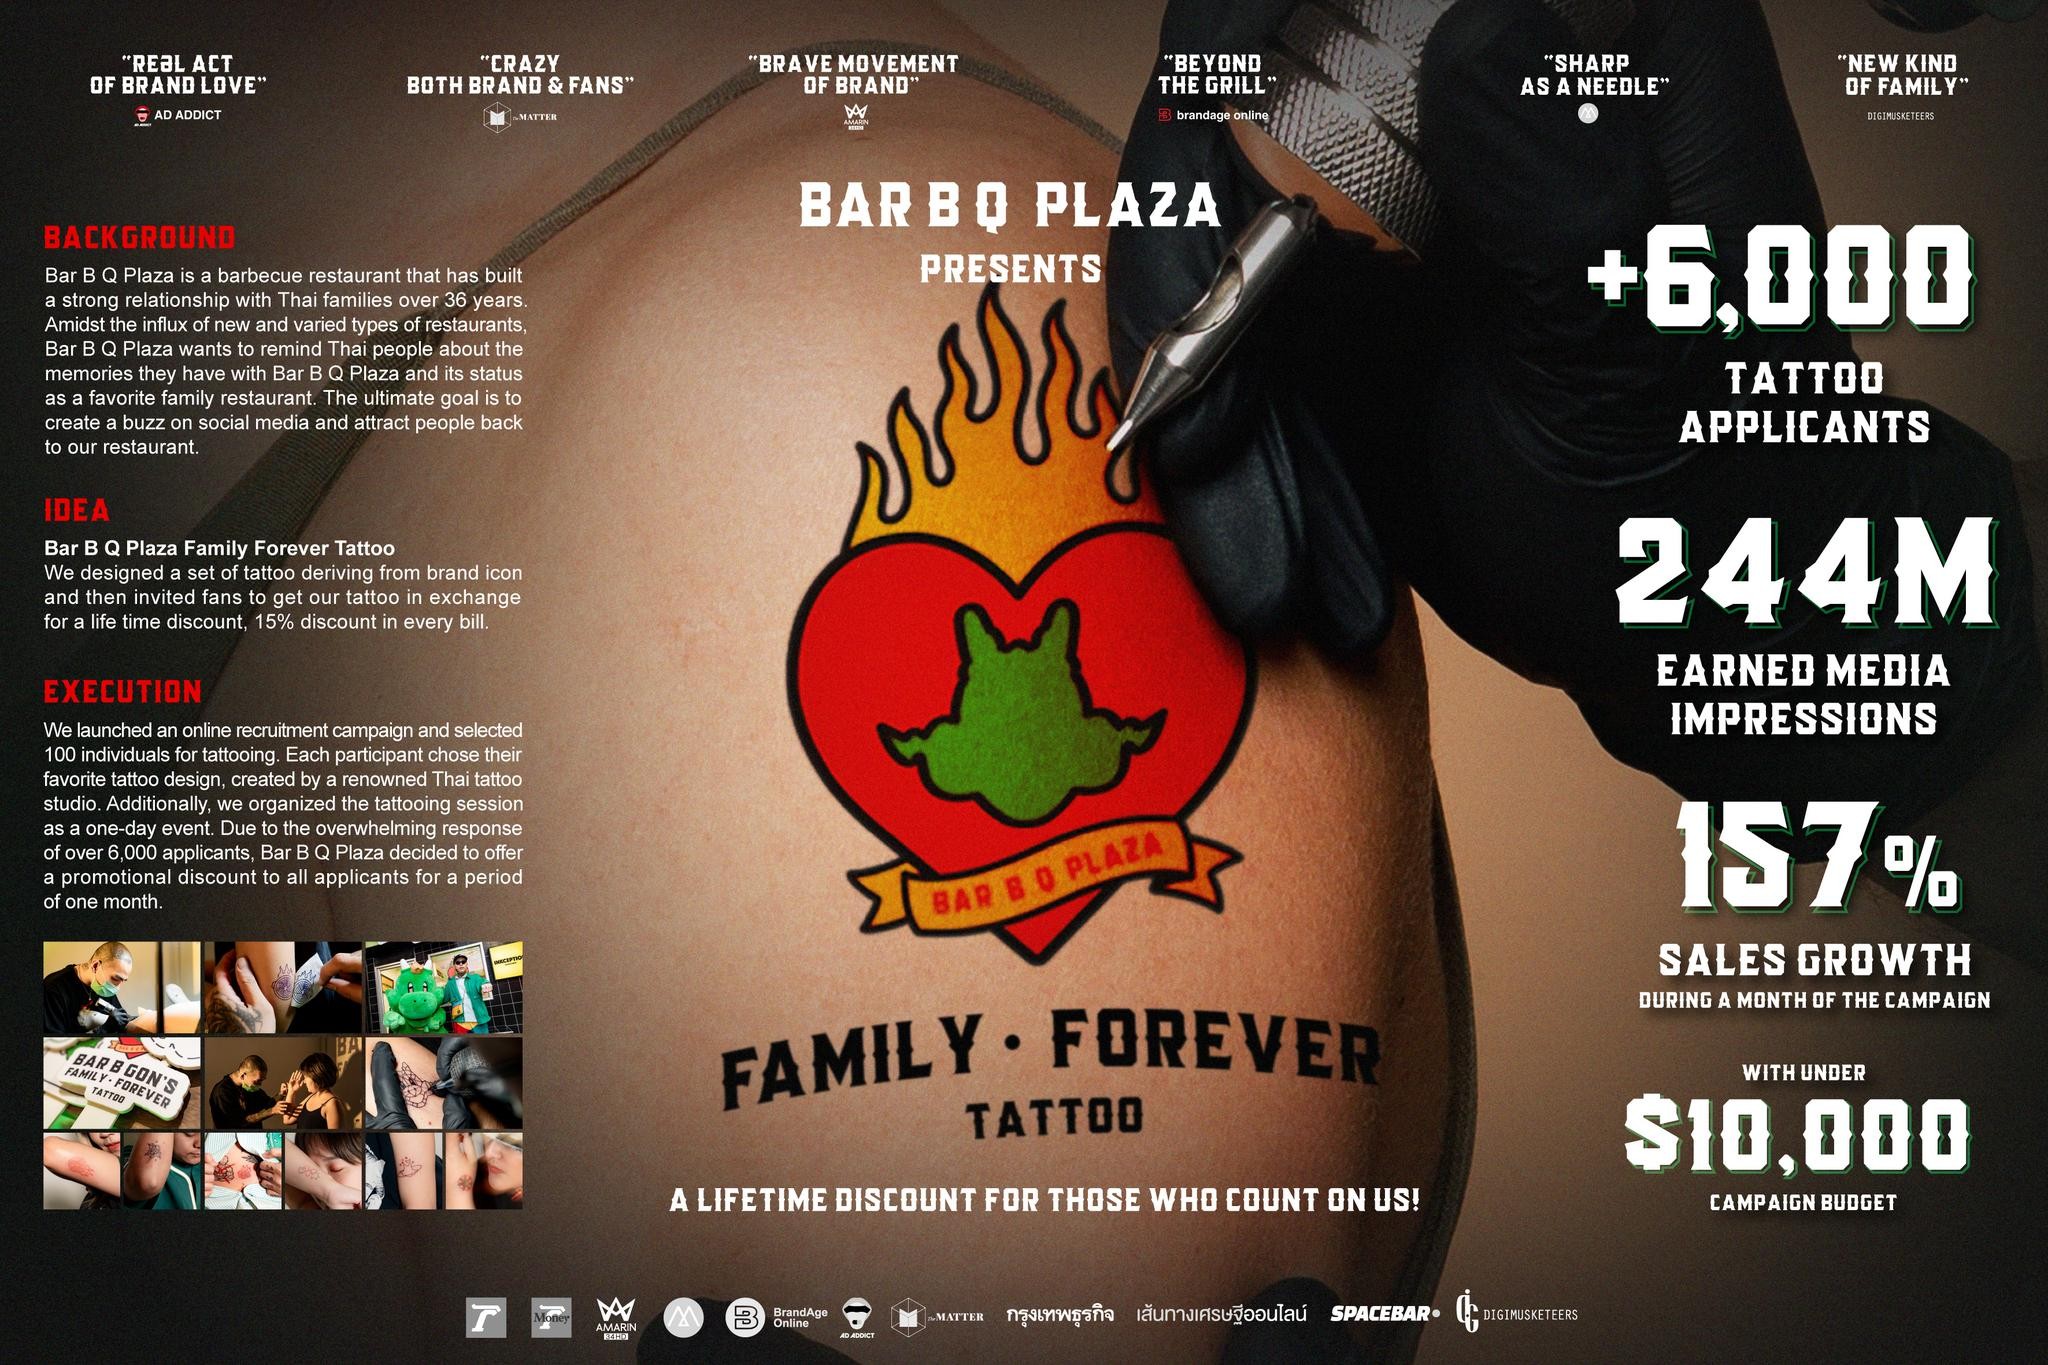 Bar B Q Plaza Family Forever Tattoo